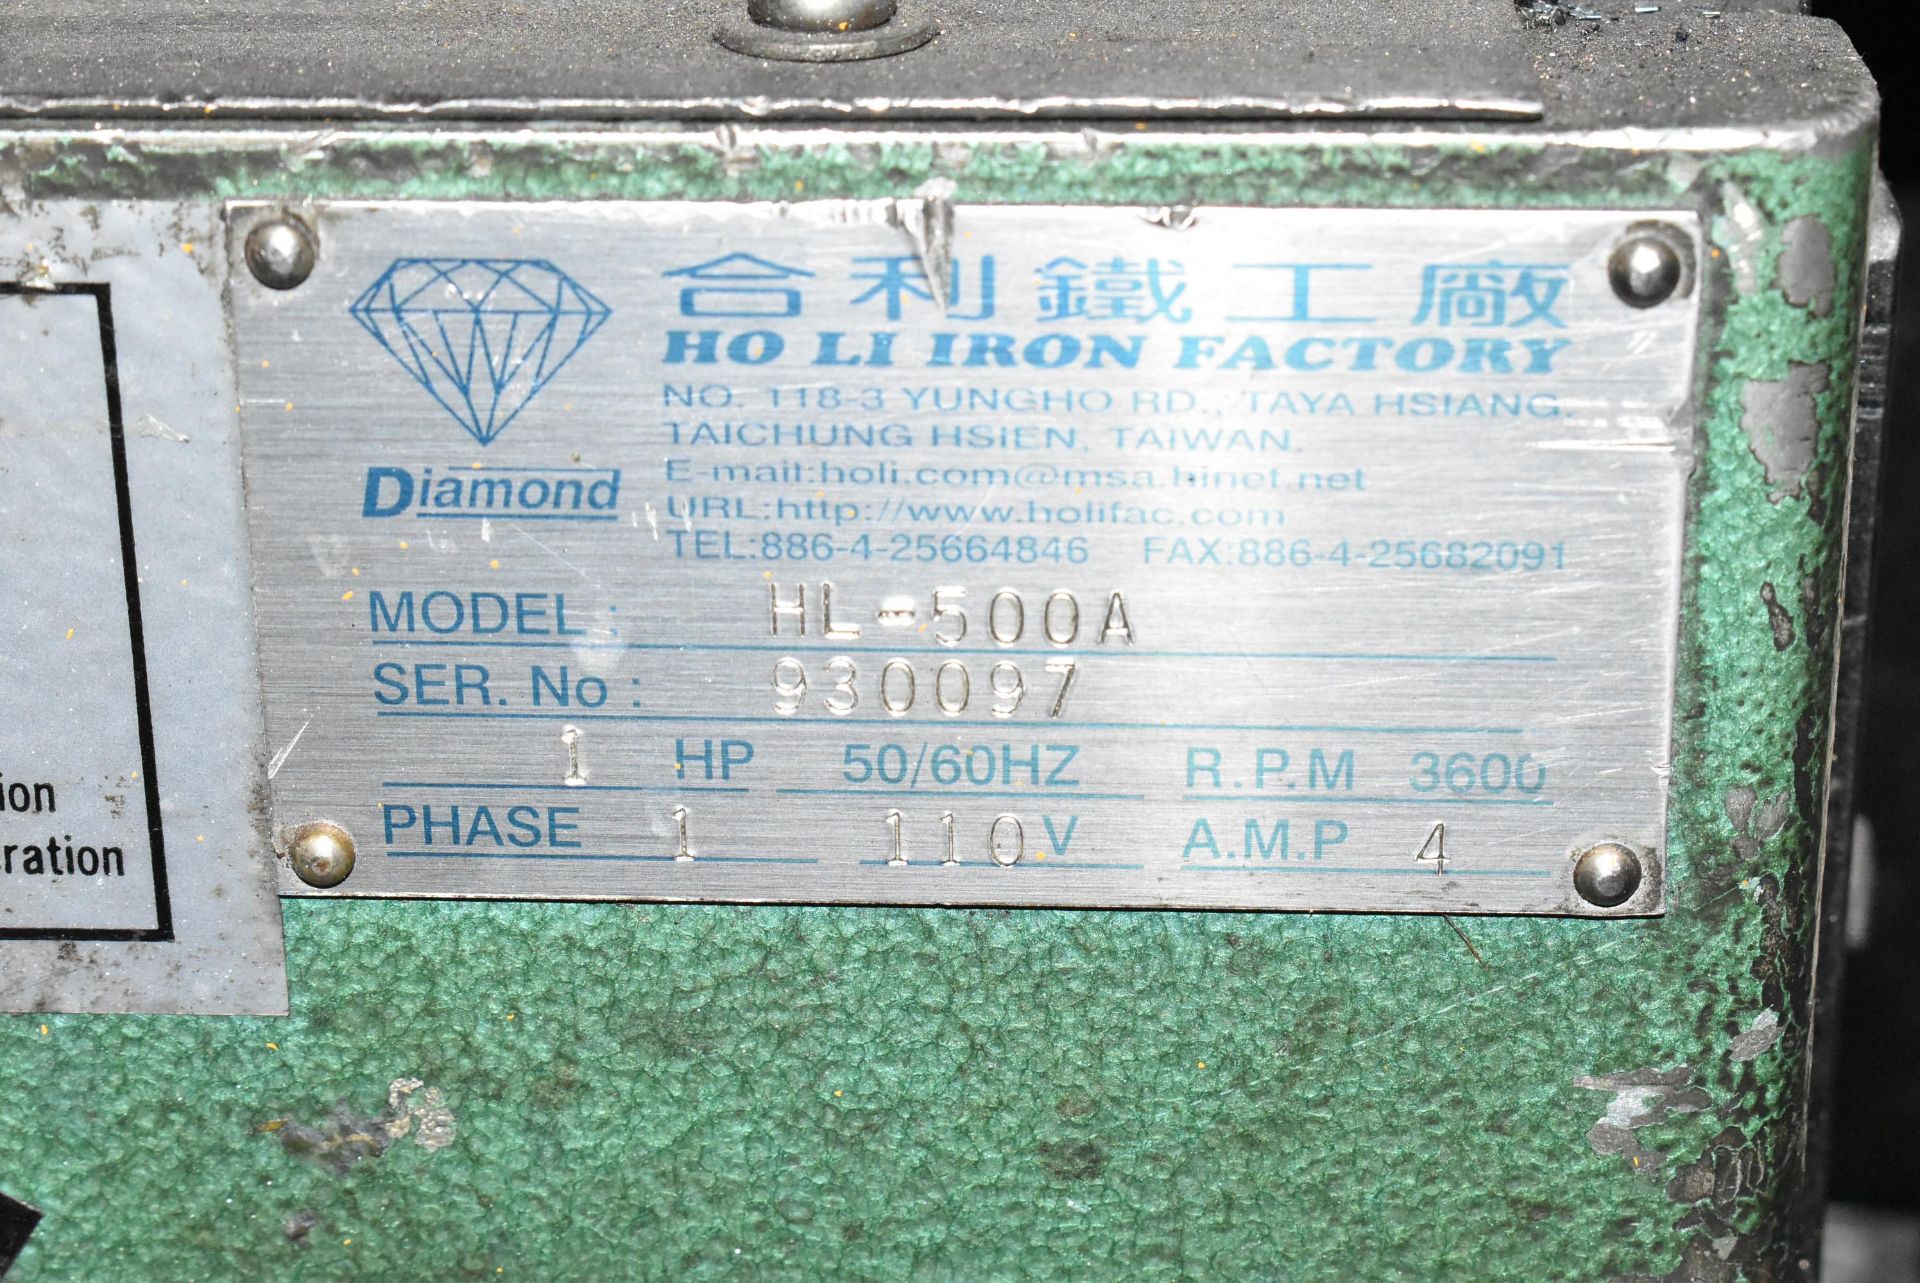 DIAMOND HL-500A CORNER SHAPER, S/N 930097 - Image 2 of 6